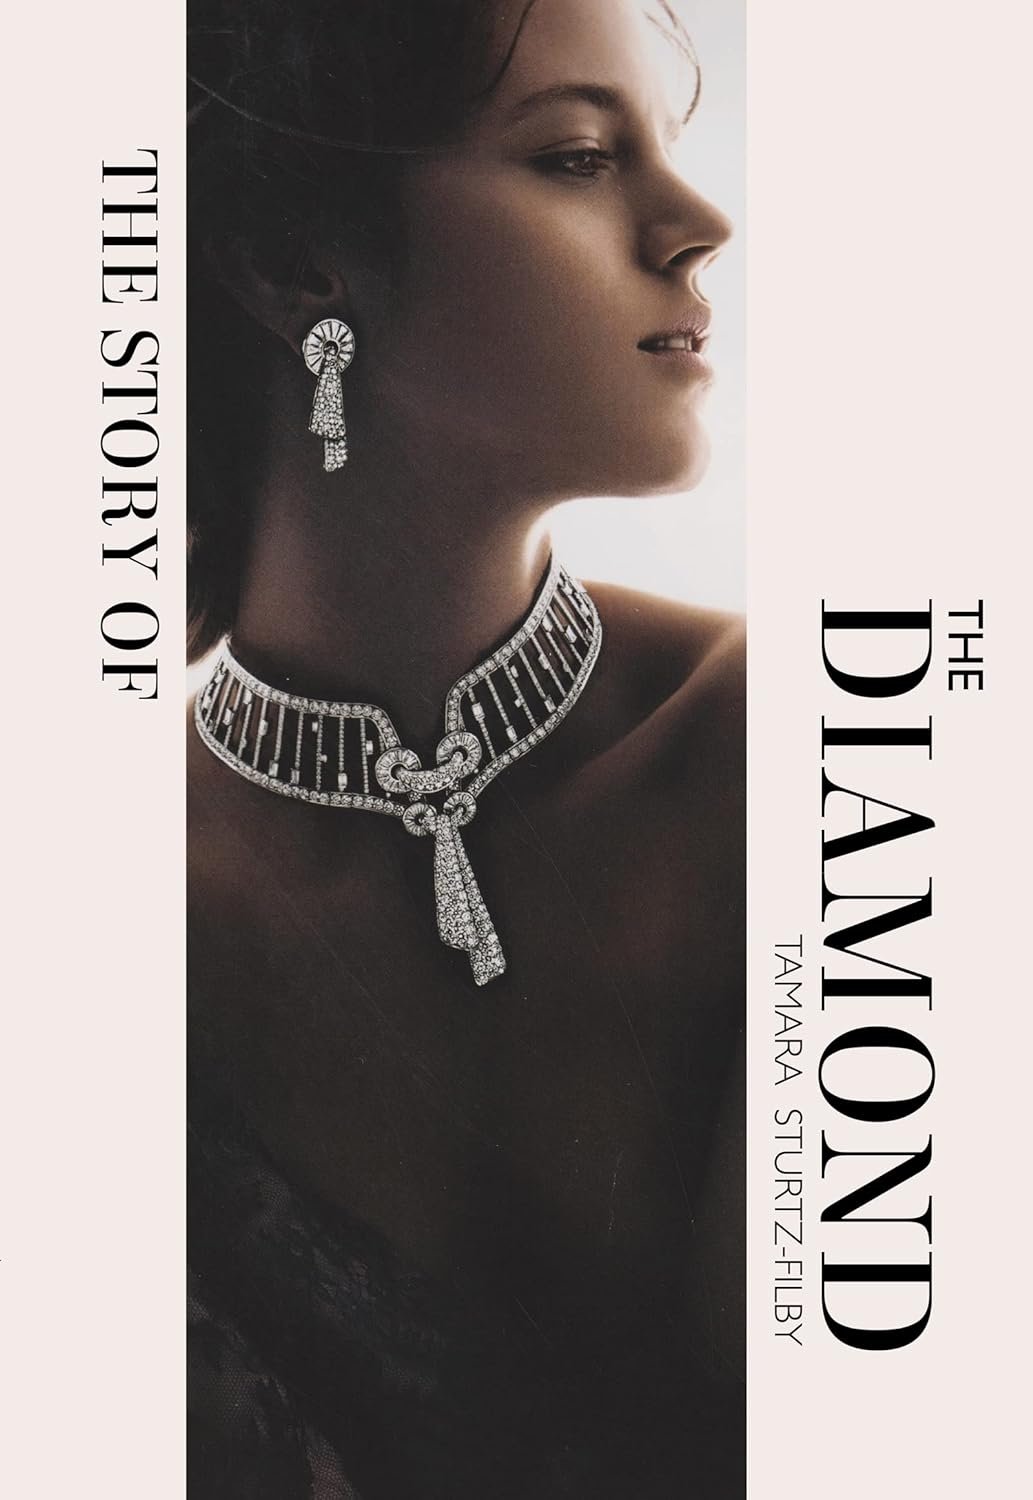 The Story of the Diamond: Timeless. Elegant. Iconic